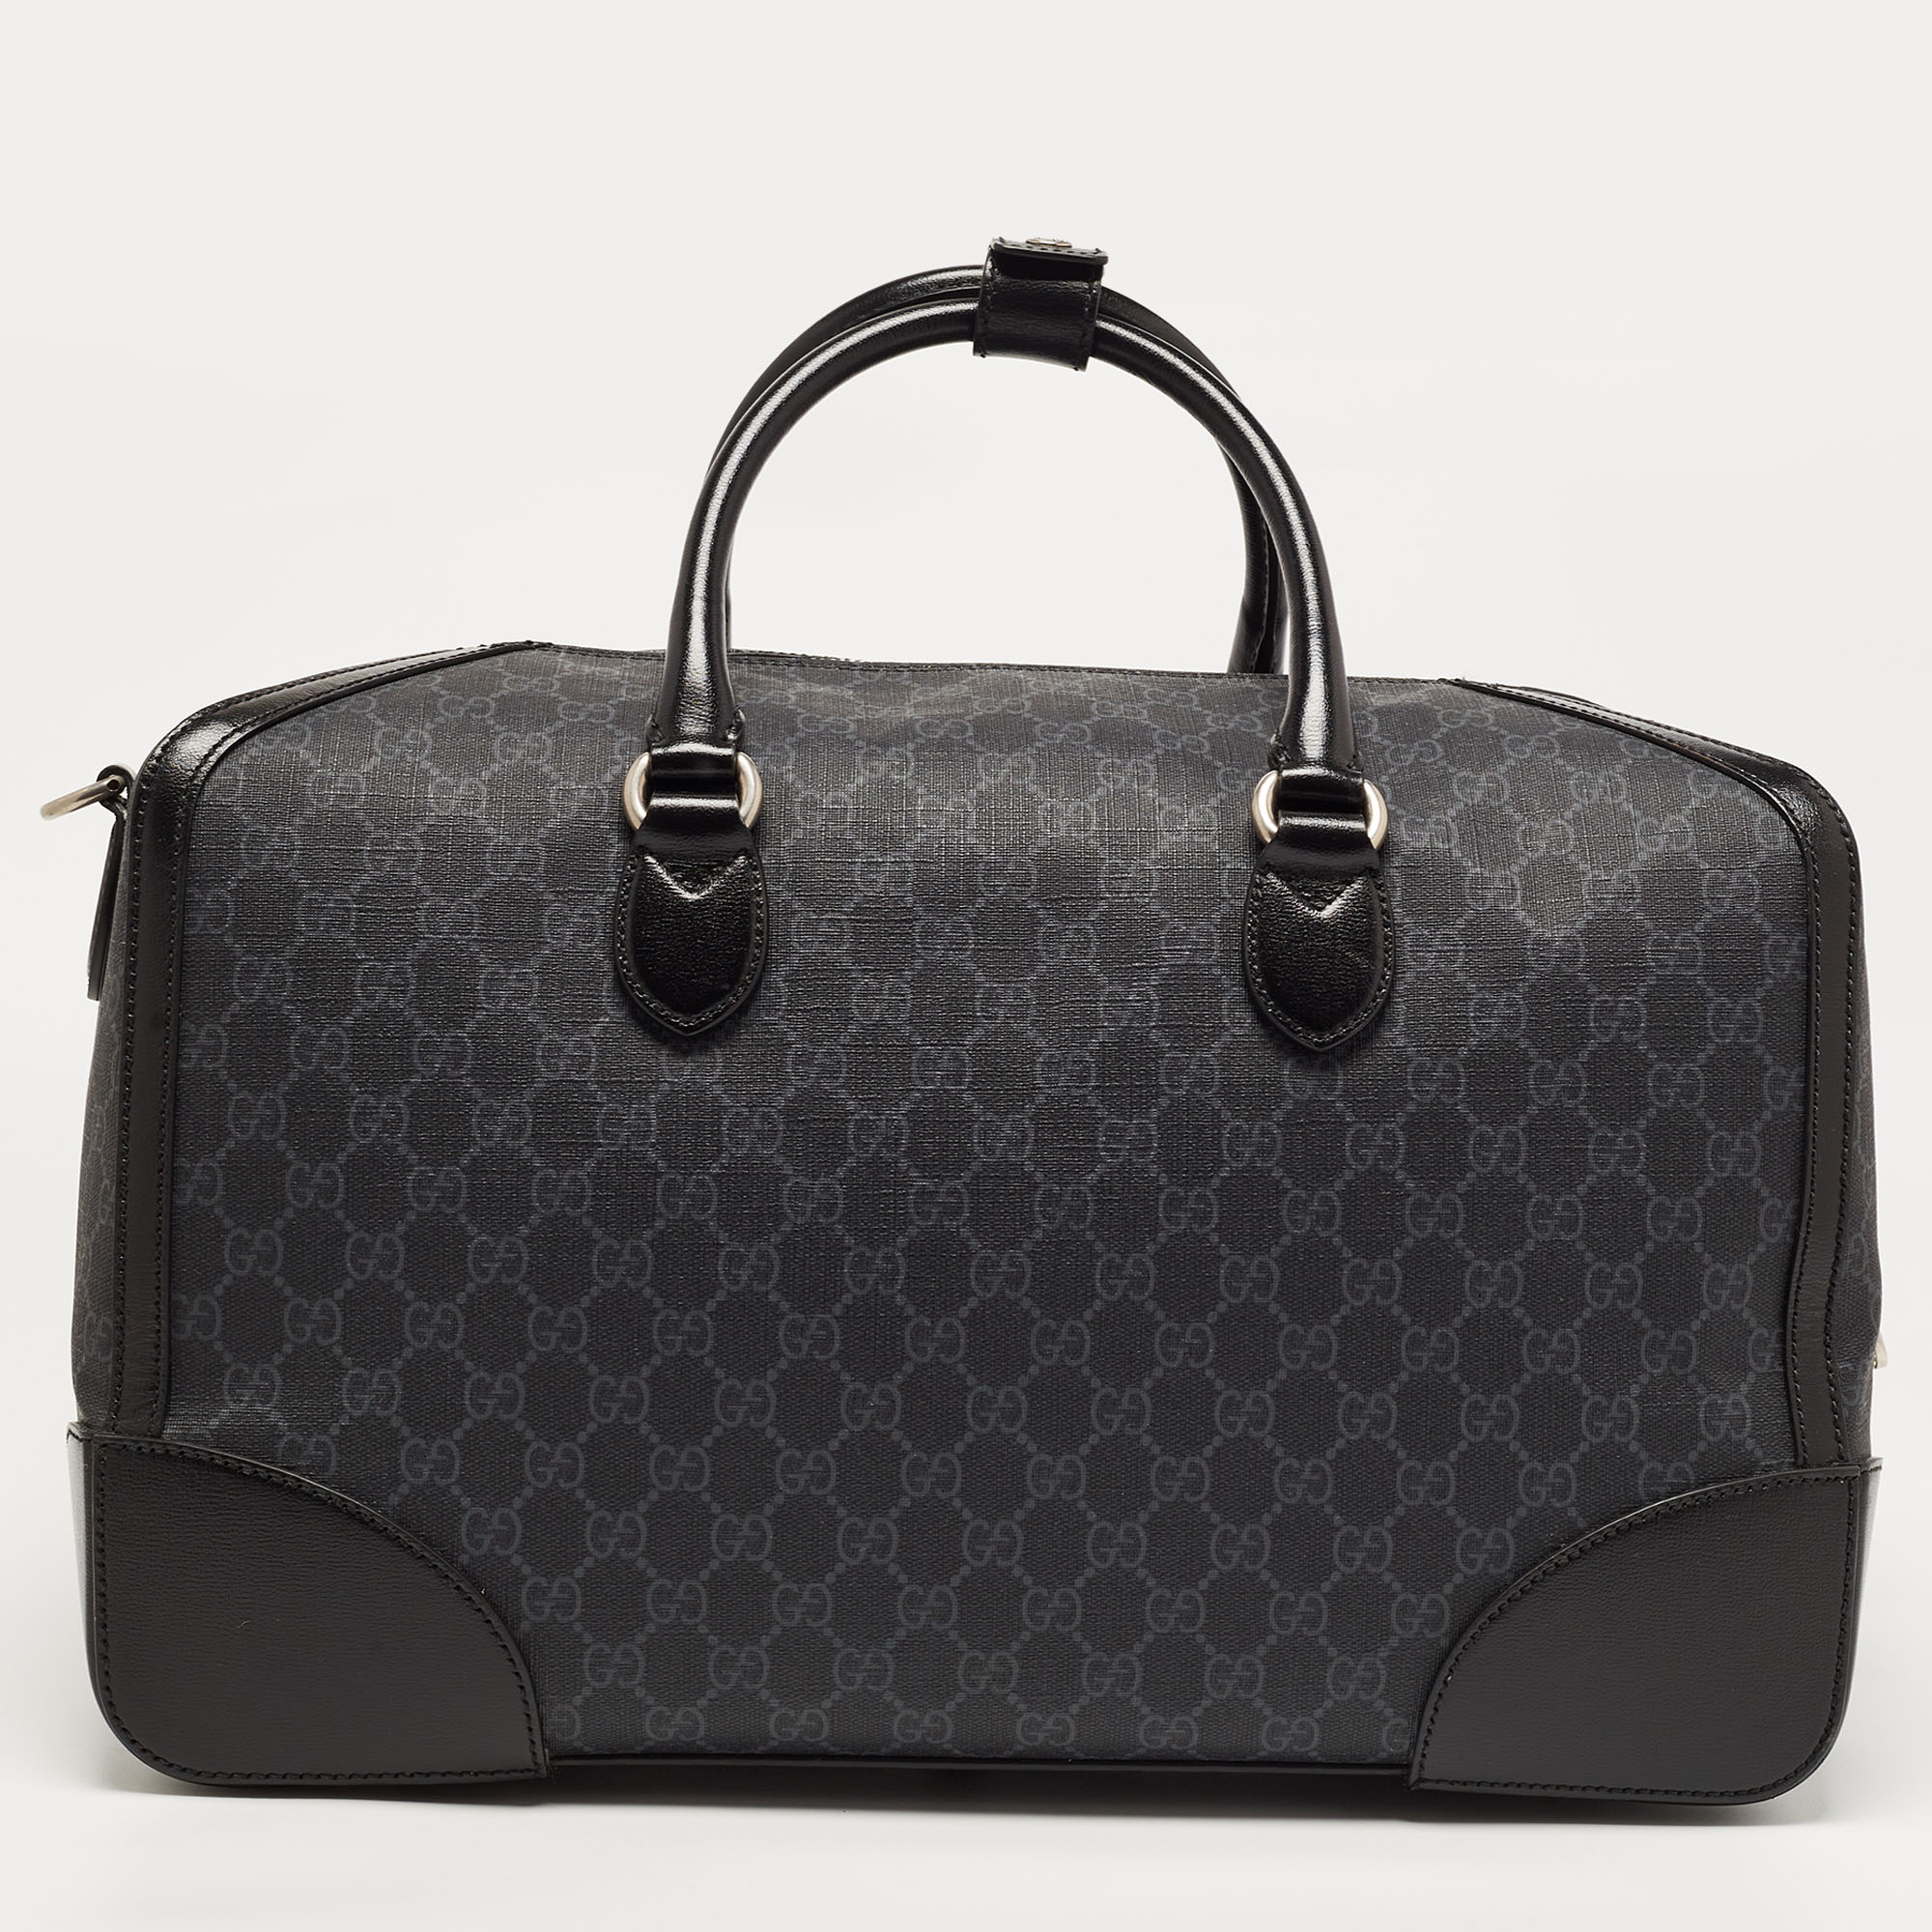 Gucci Black GG Supreme Canvas Interlocking G Duffle Bag